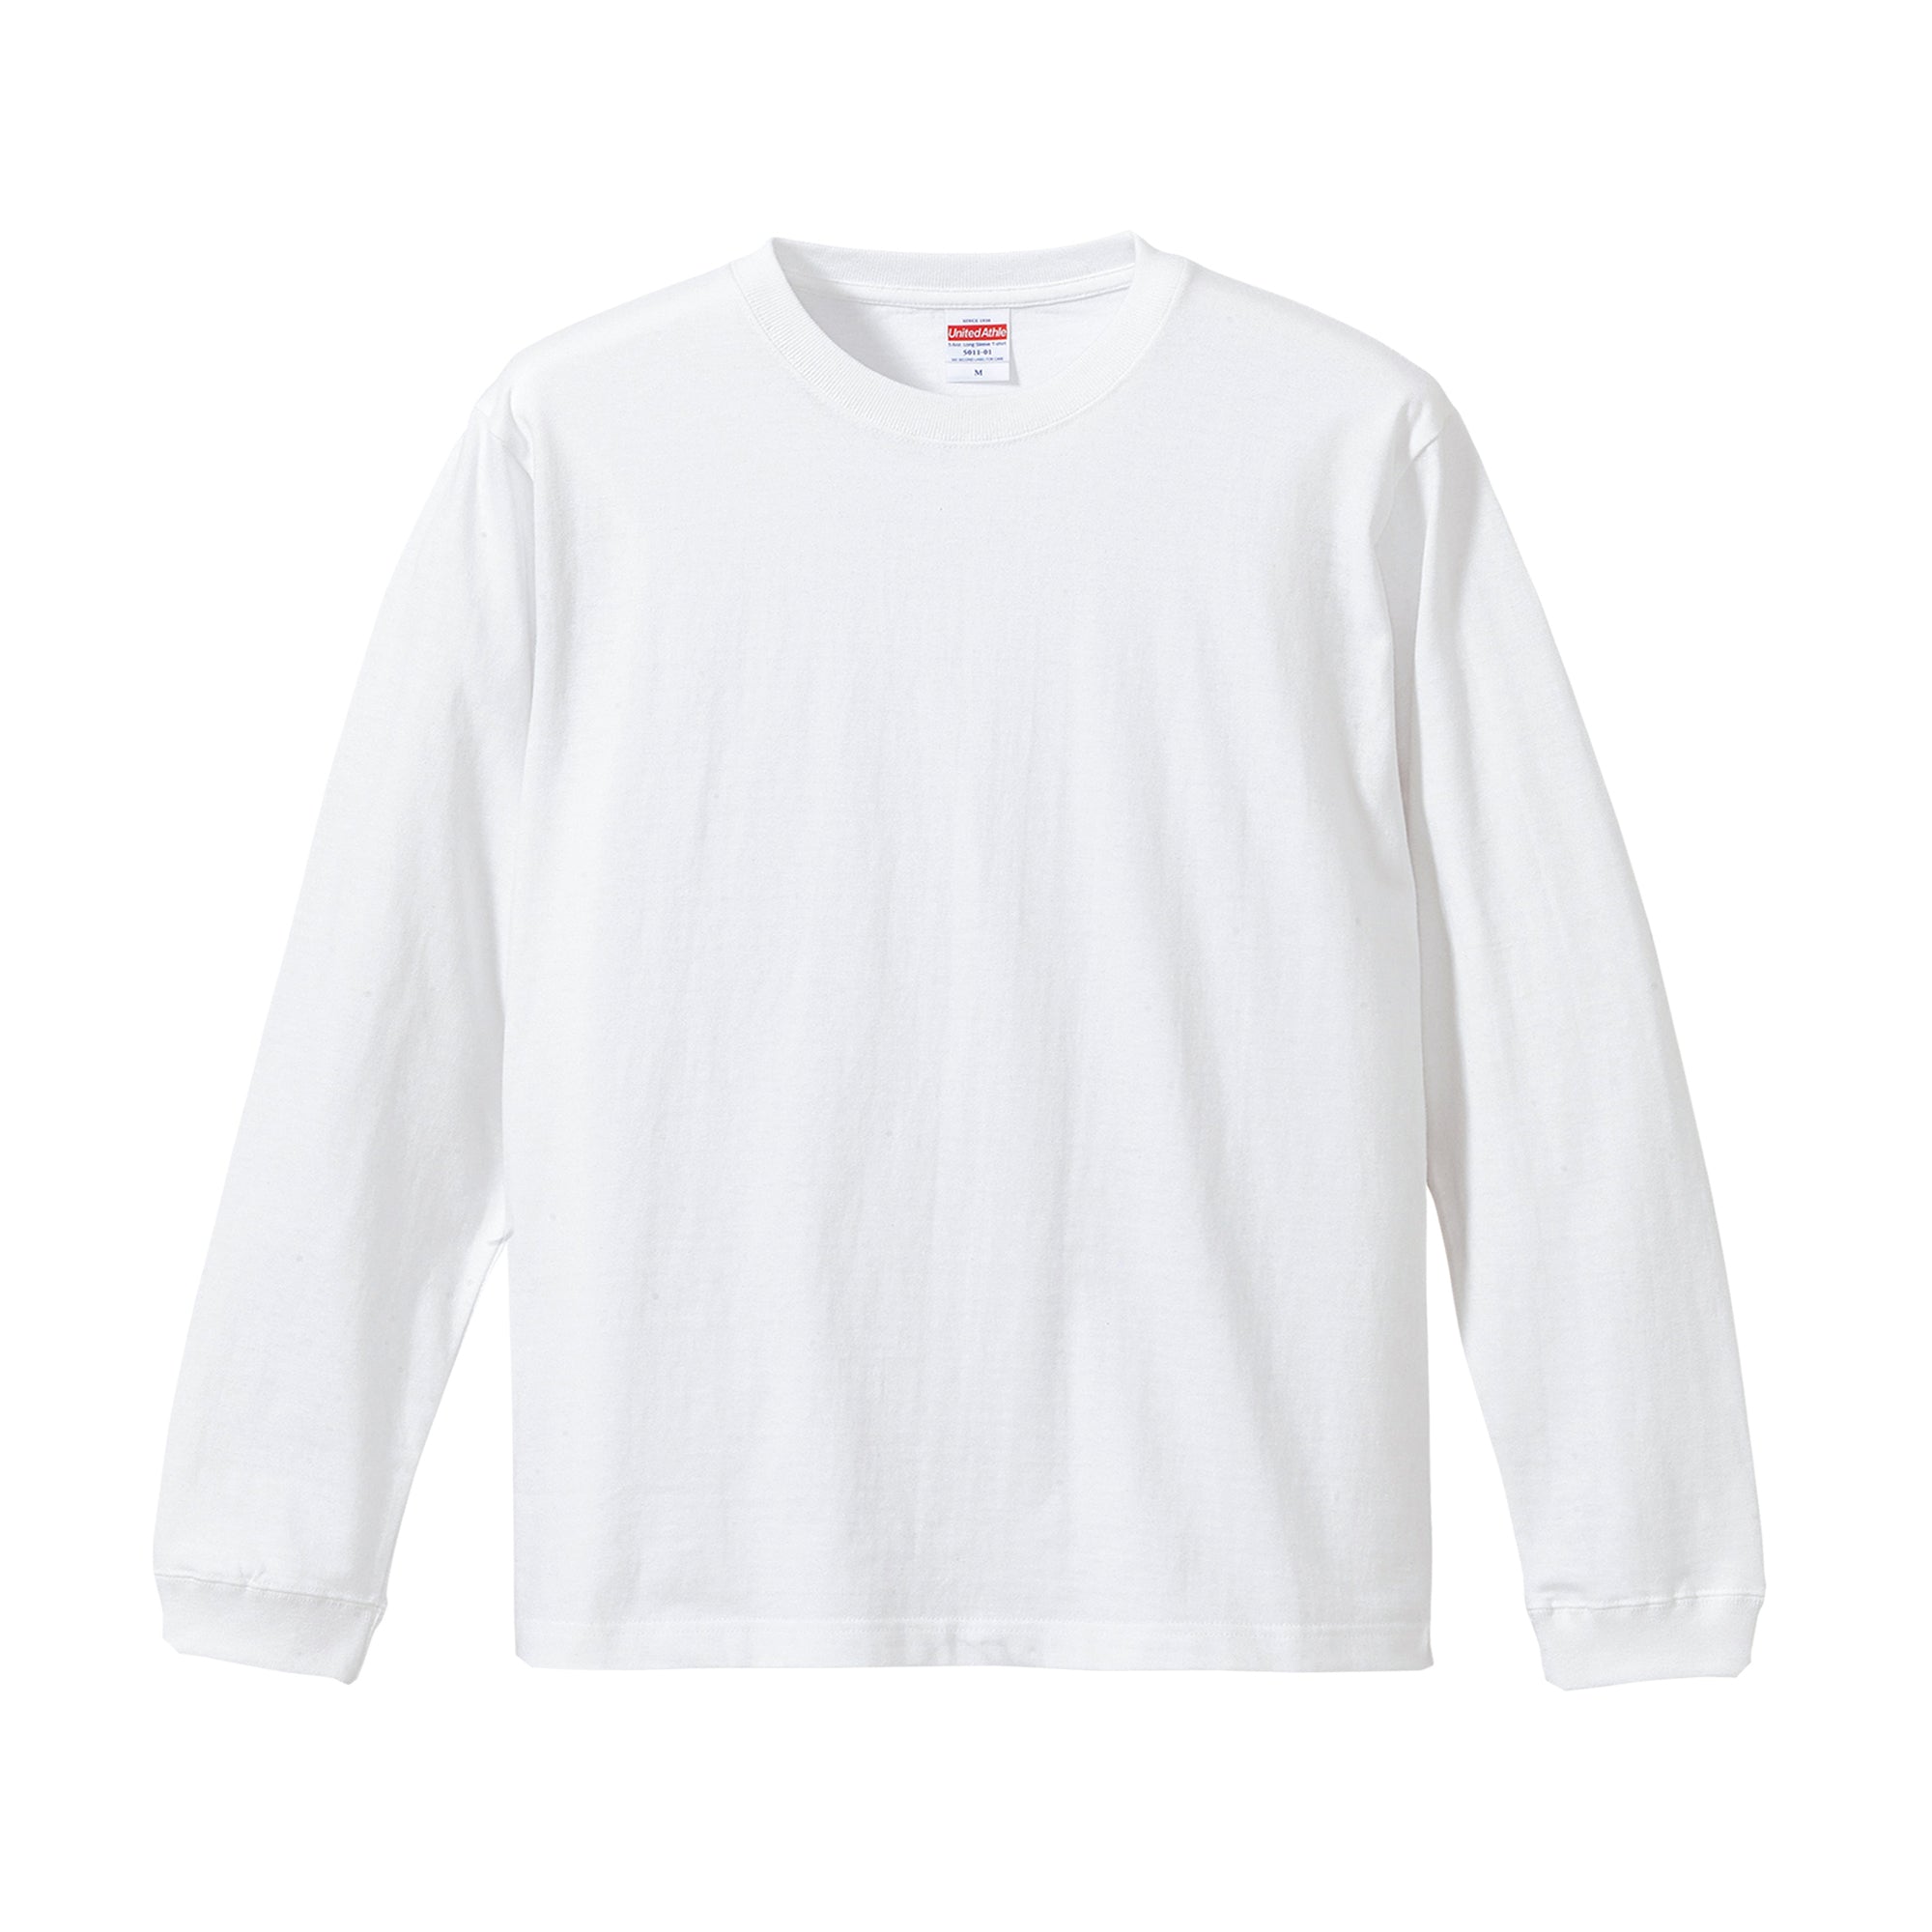 5011 - 5.6oz Long Sleeve Tee - White